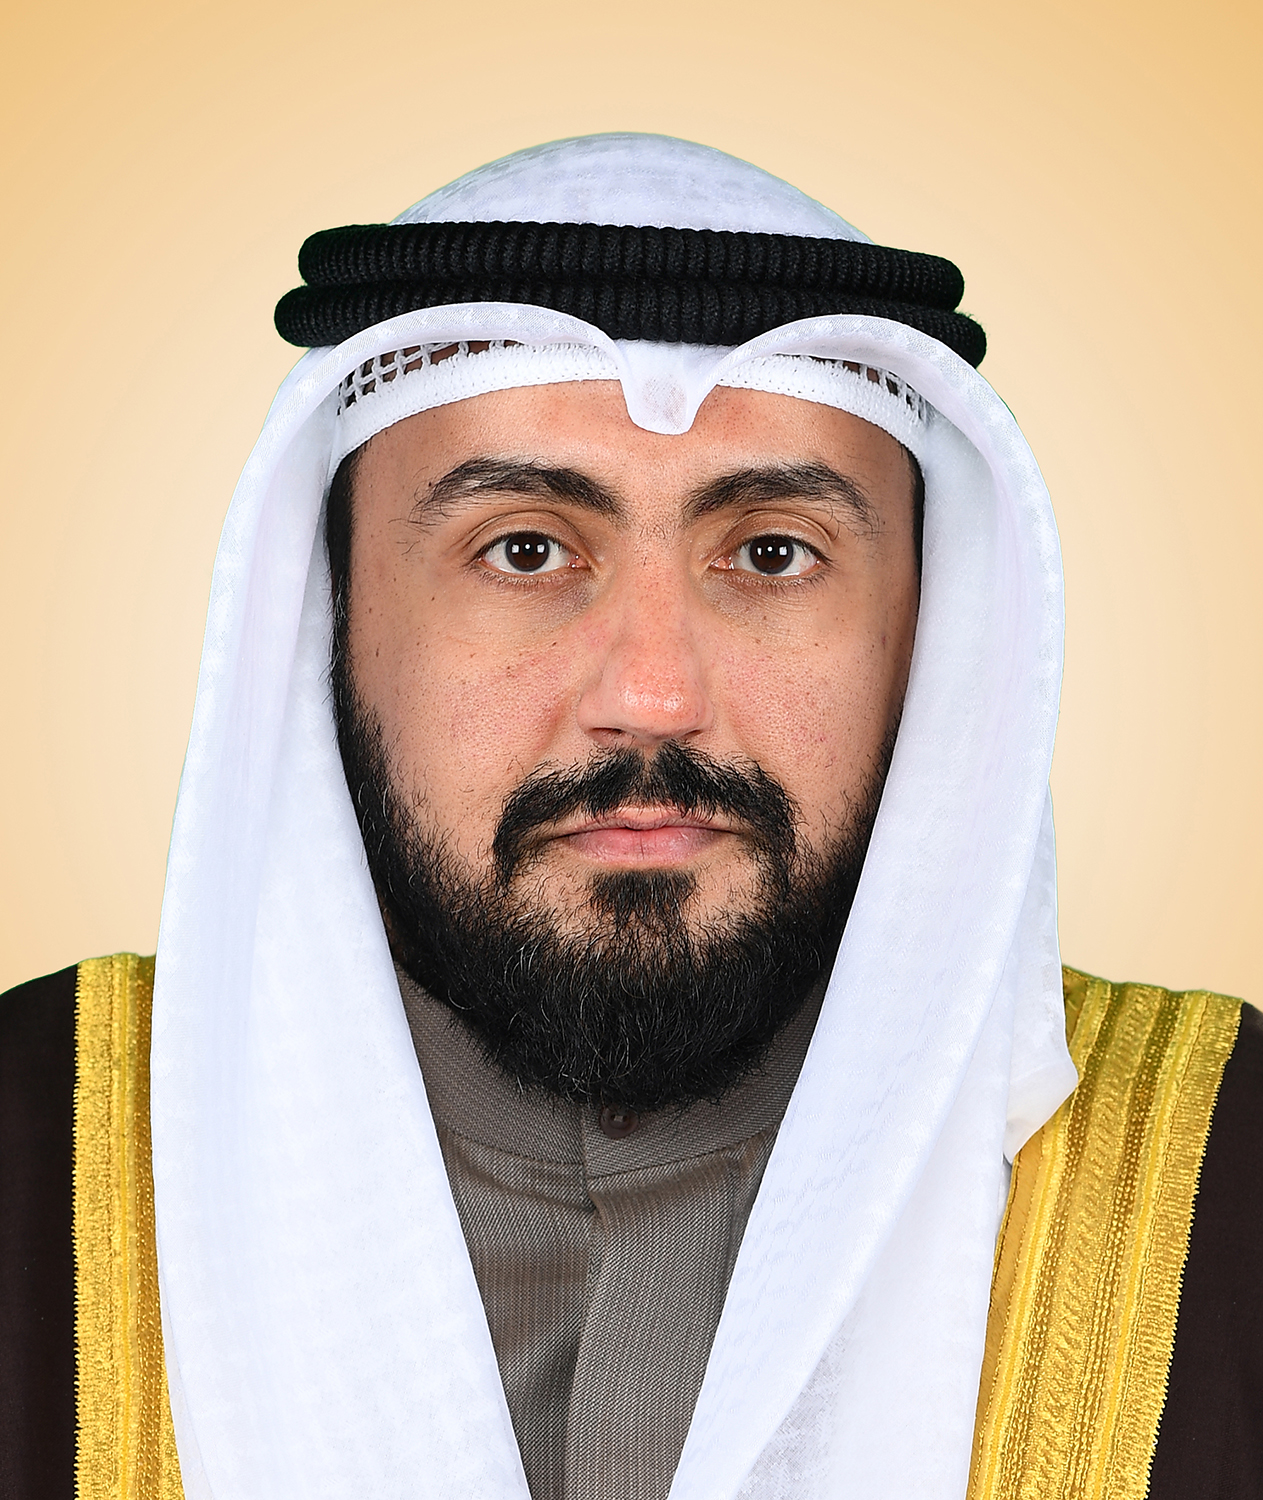 Kuwaiti Health Minister Sheikh Basel Al-Sabah